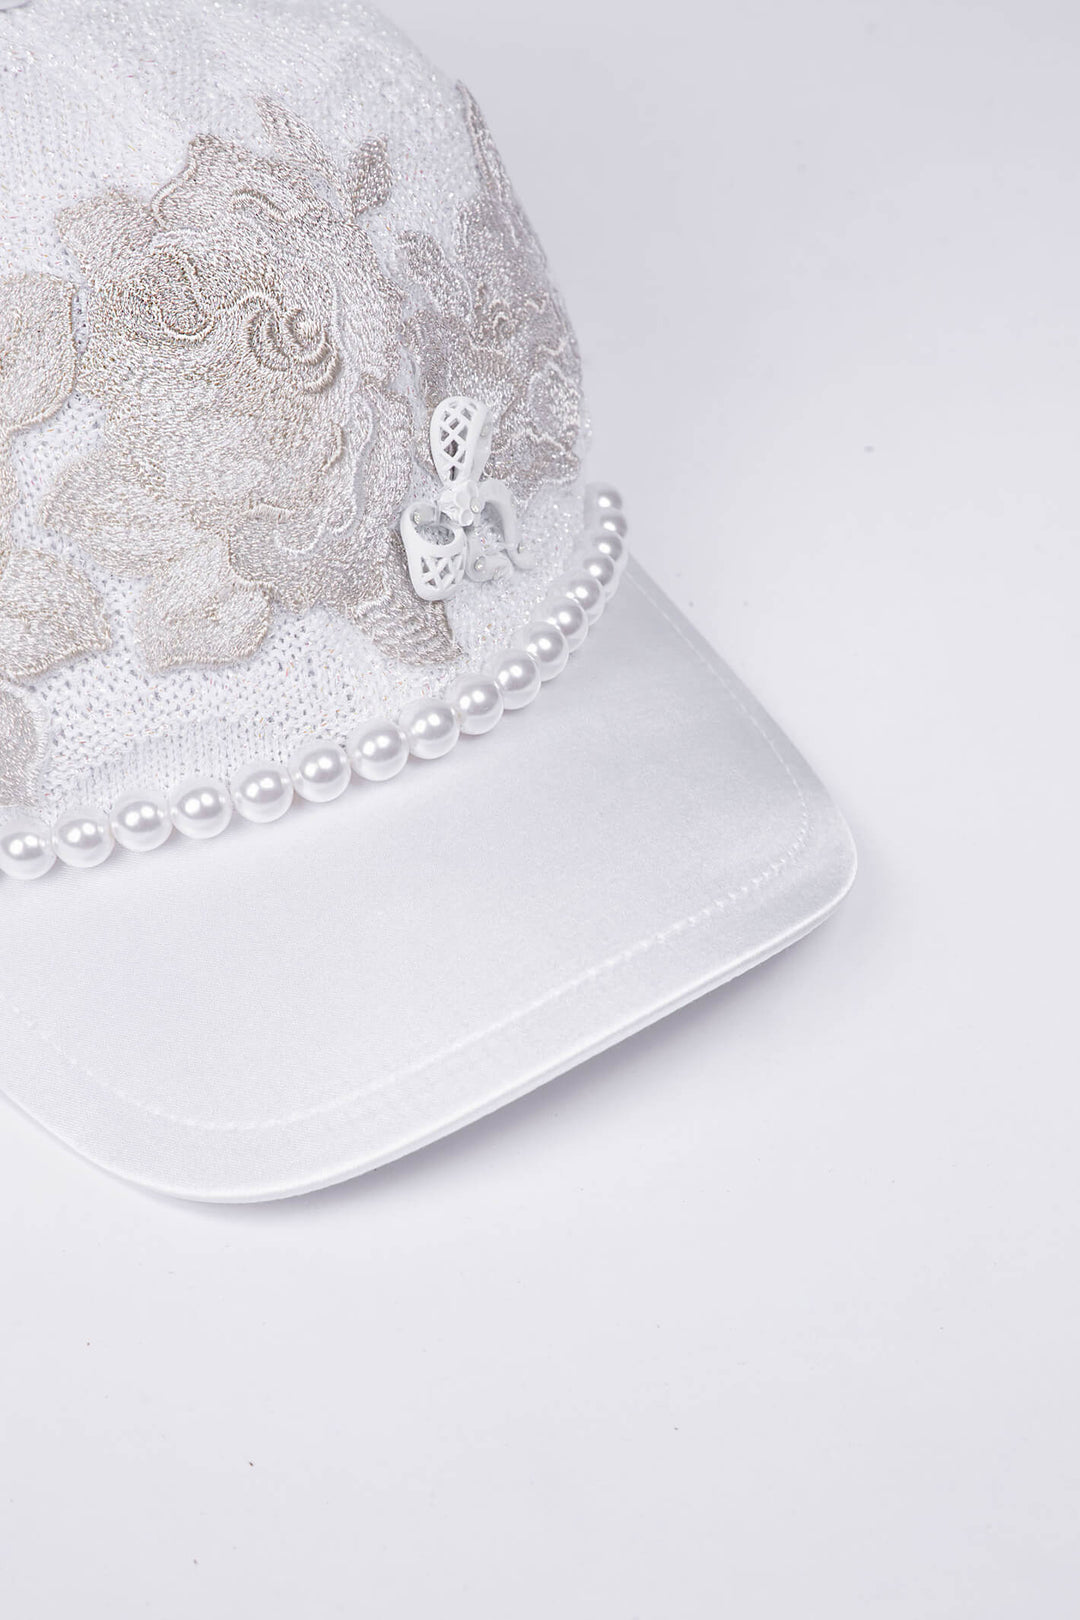 Elisa Cavaletti ELP210404101 White Lace Cap - Experience Boutique